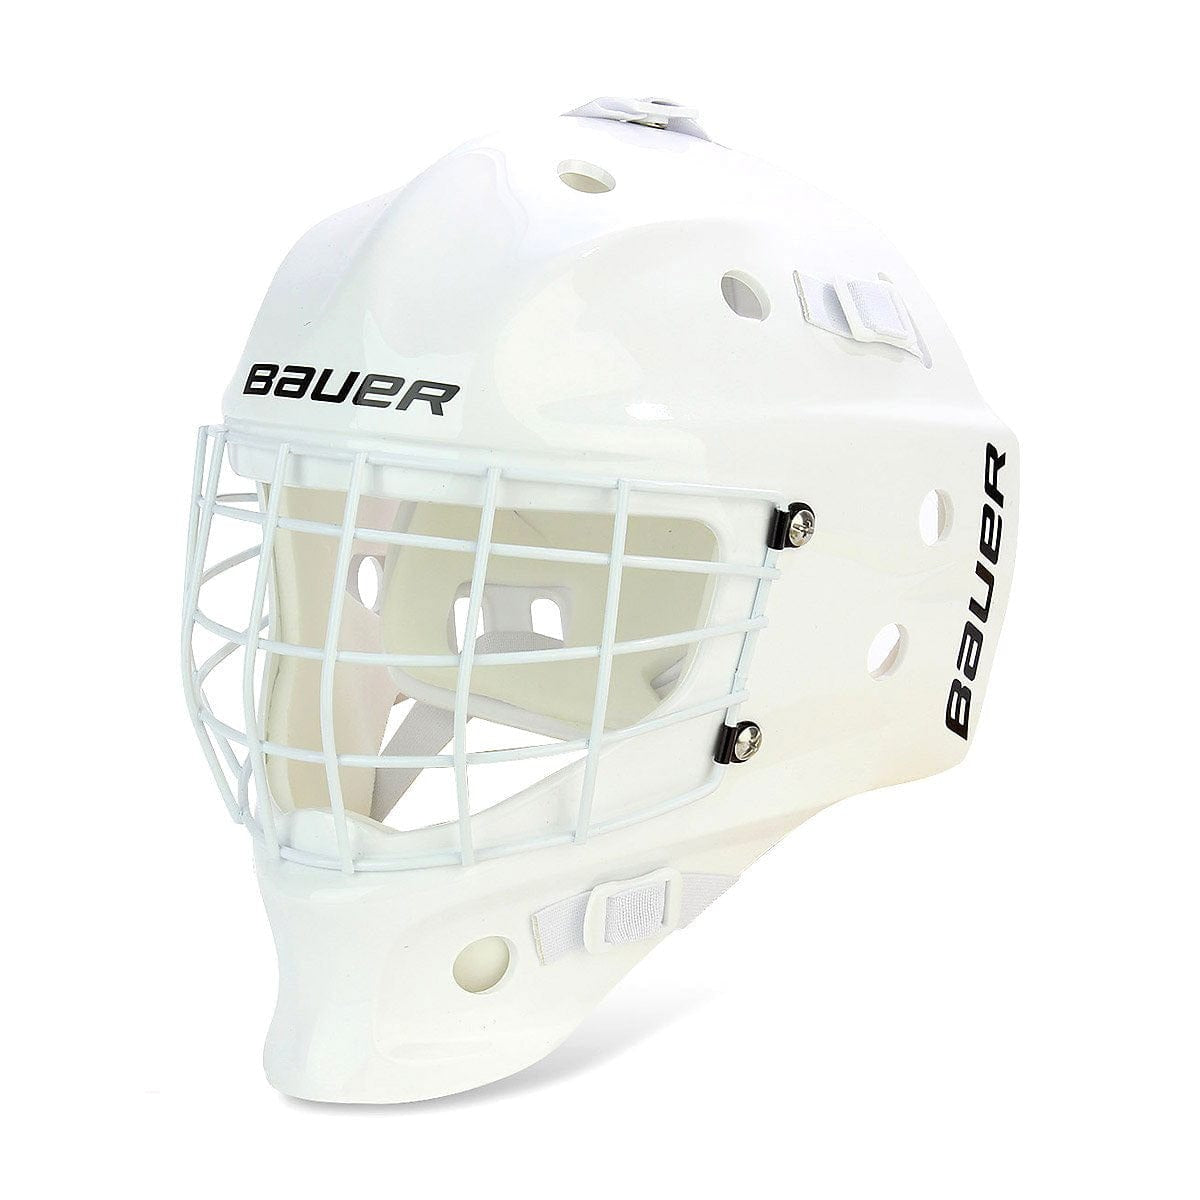 Bauer NME Youth Street Hockey Goalie Mask